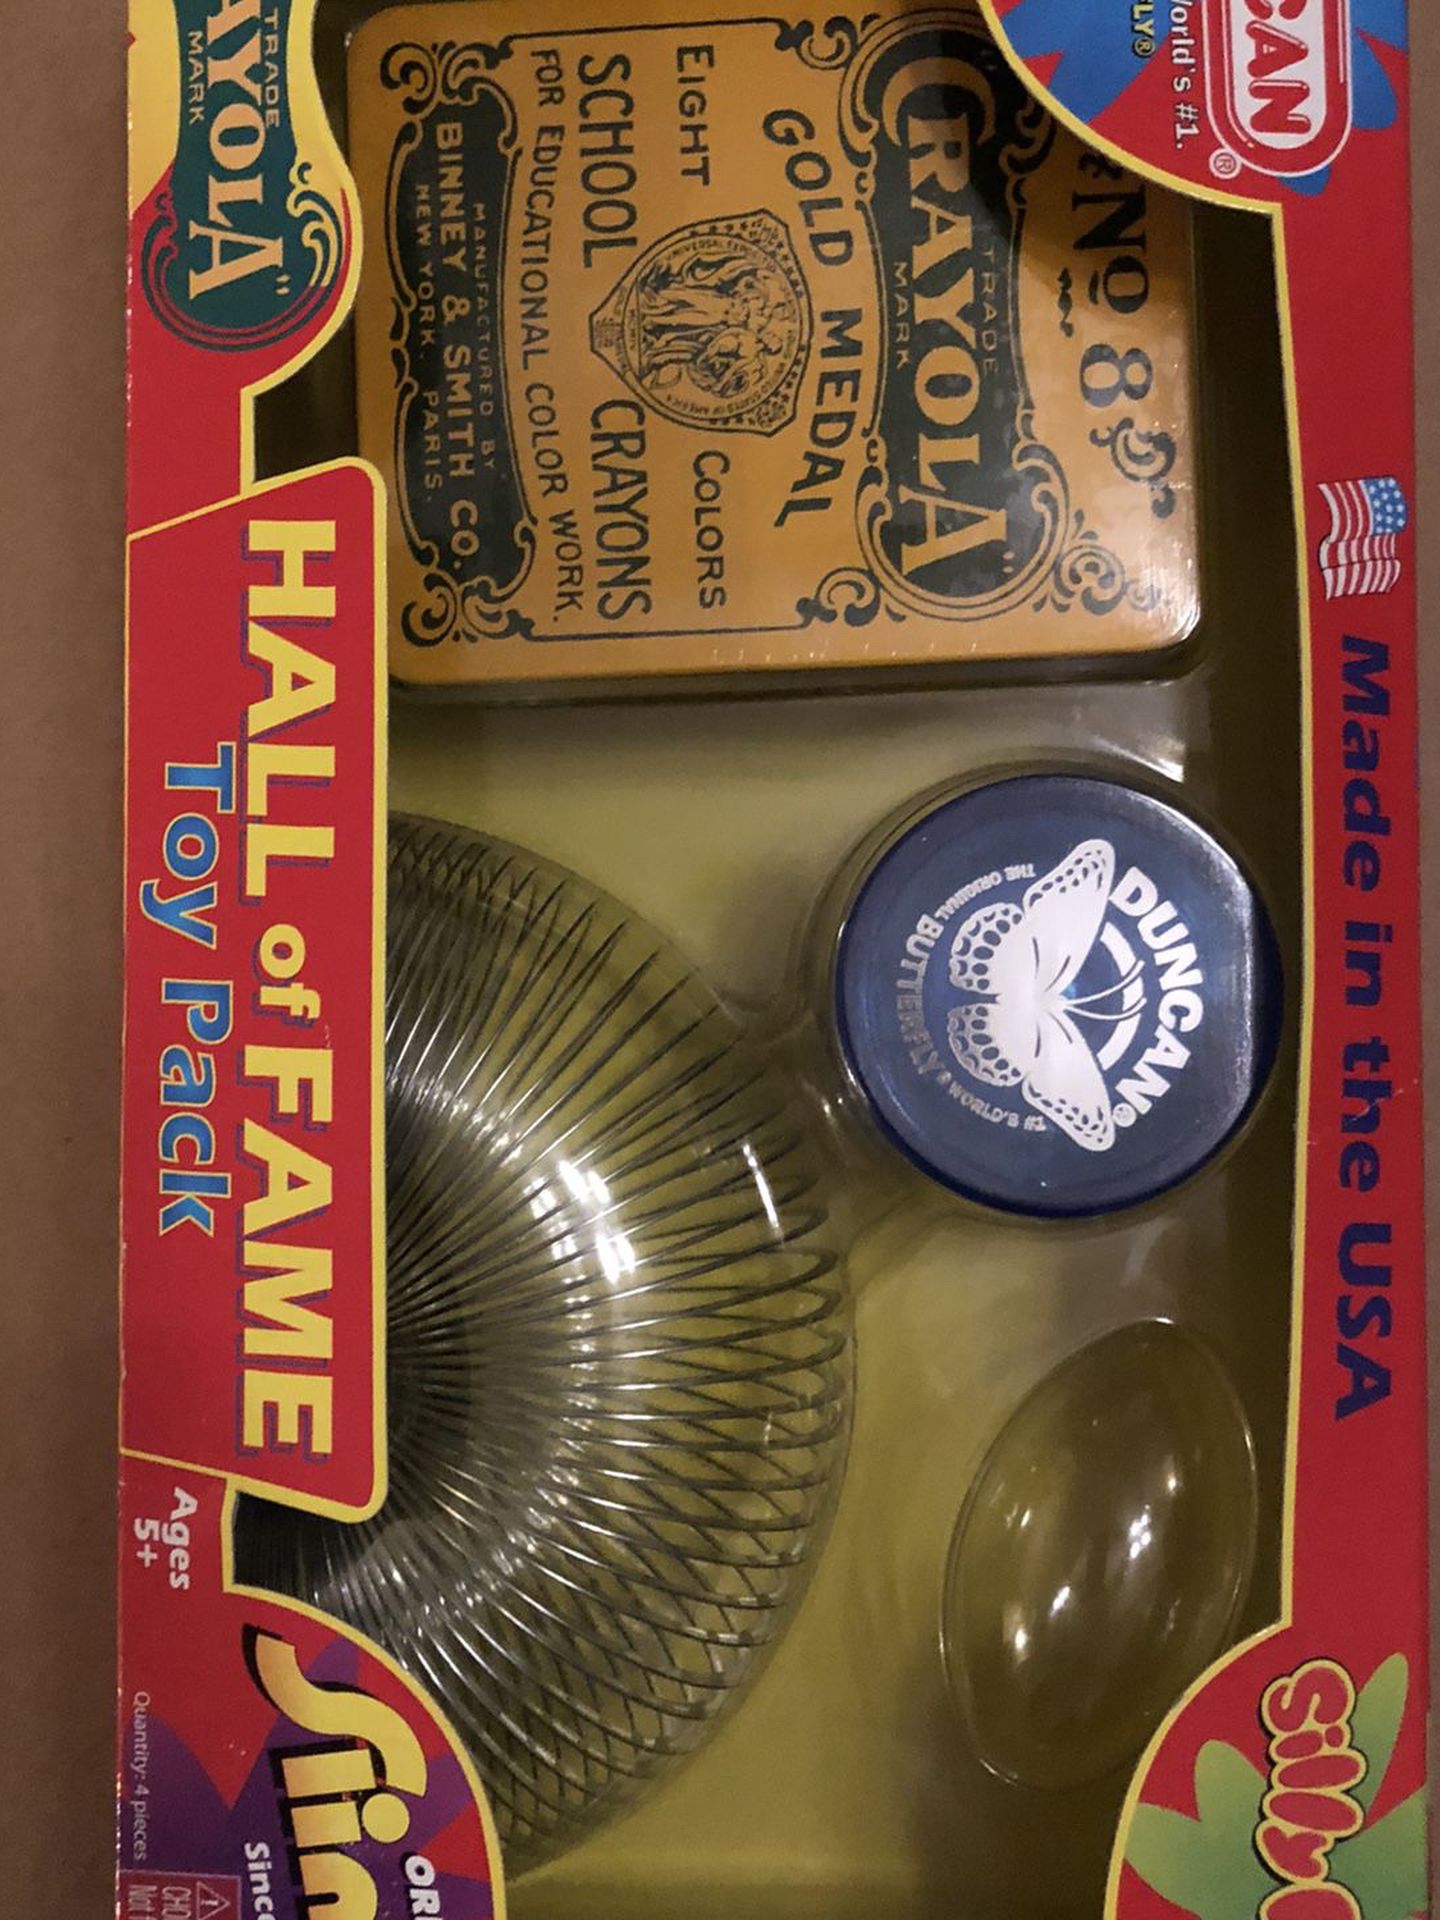 Hall Of Fame Toy Pack - Slinky & Yo-yo